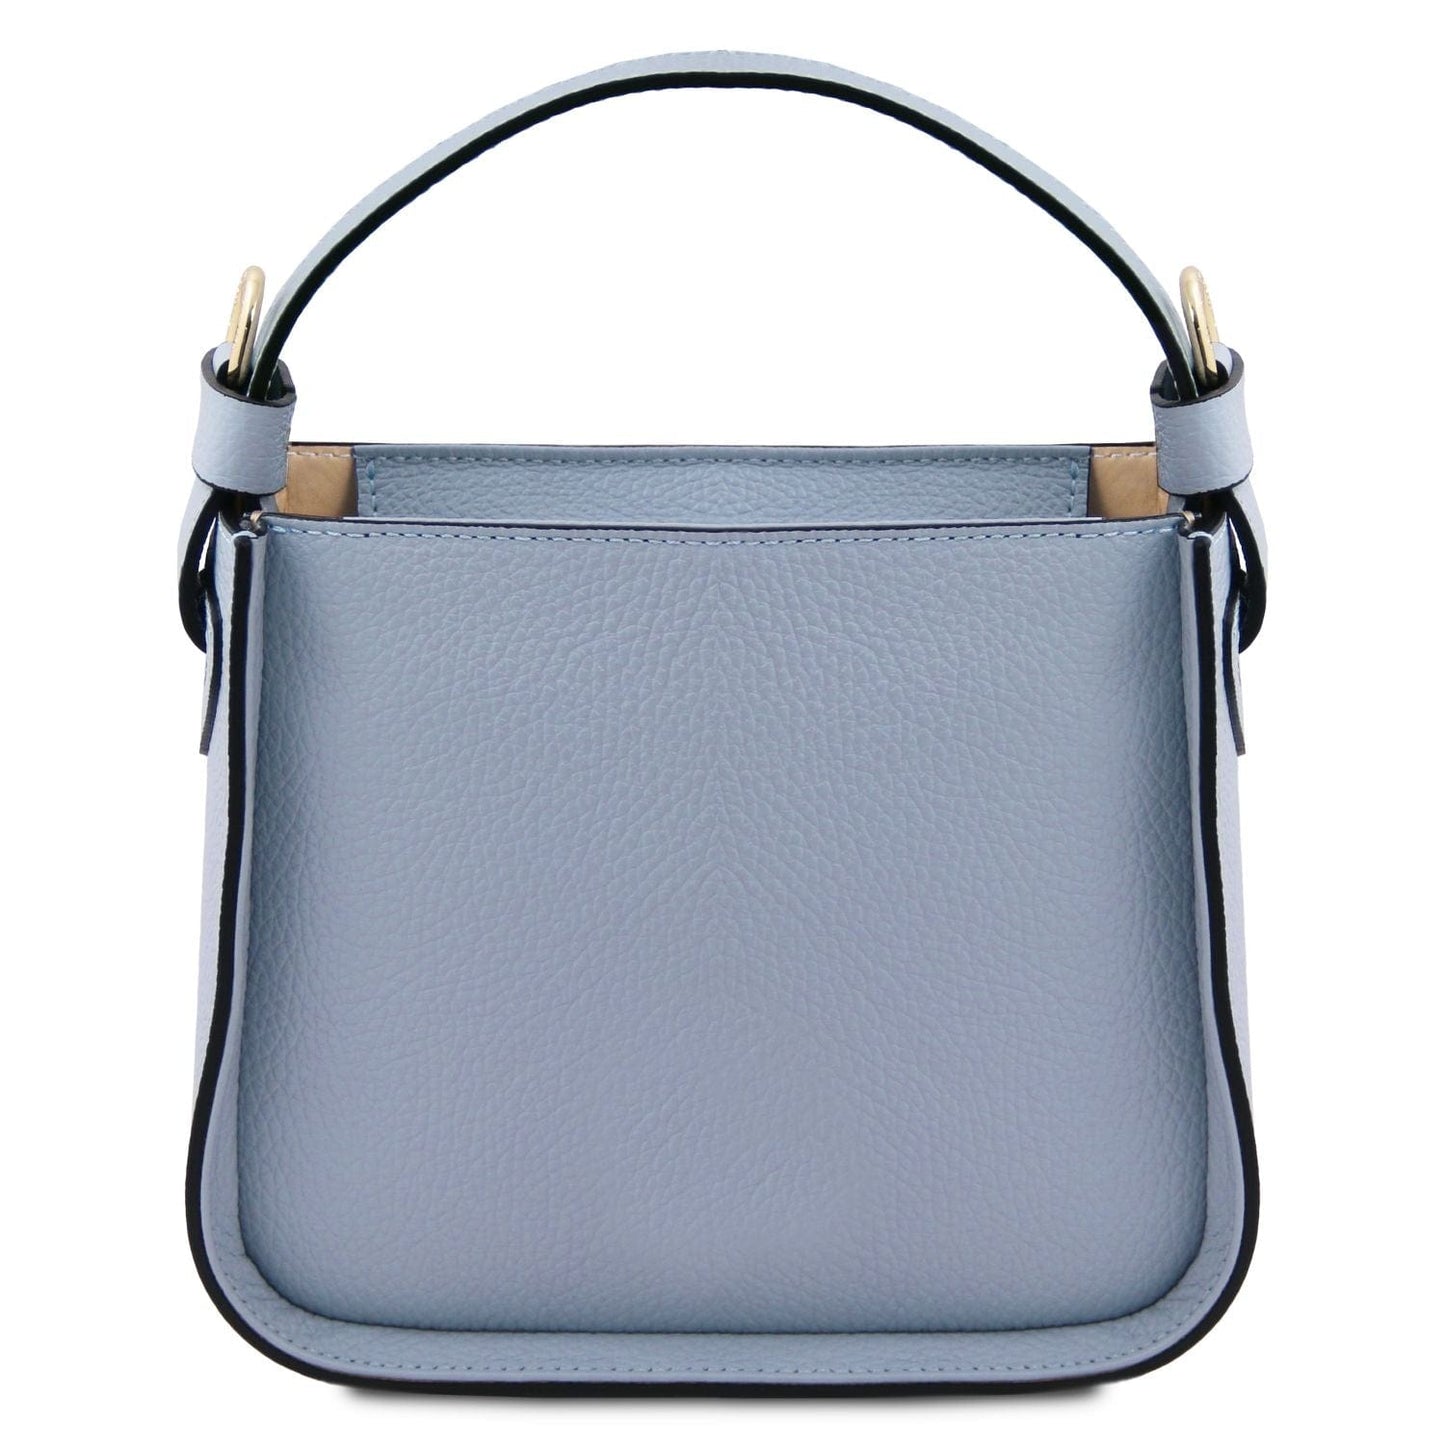 Grace - Leather handbag | TL142350 - Premium Leather handbags - Shop now at San Rocco Italia